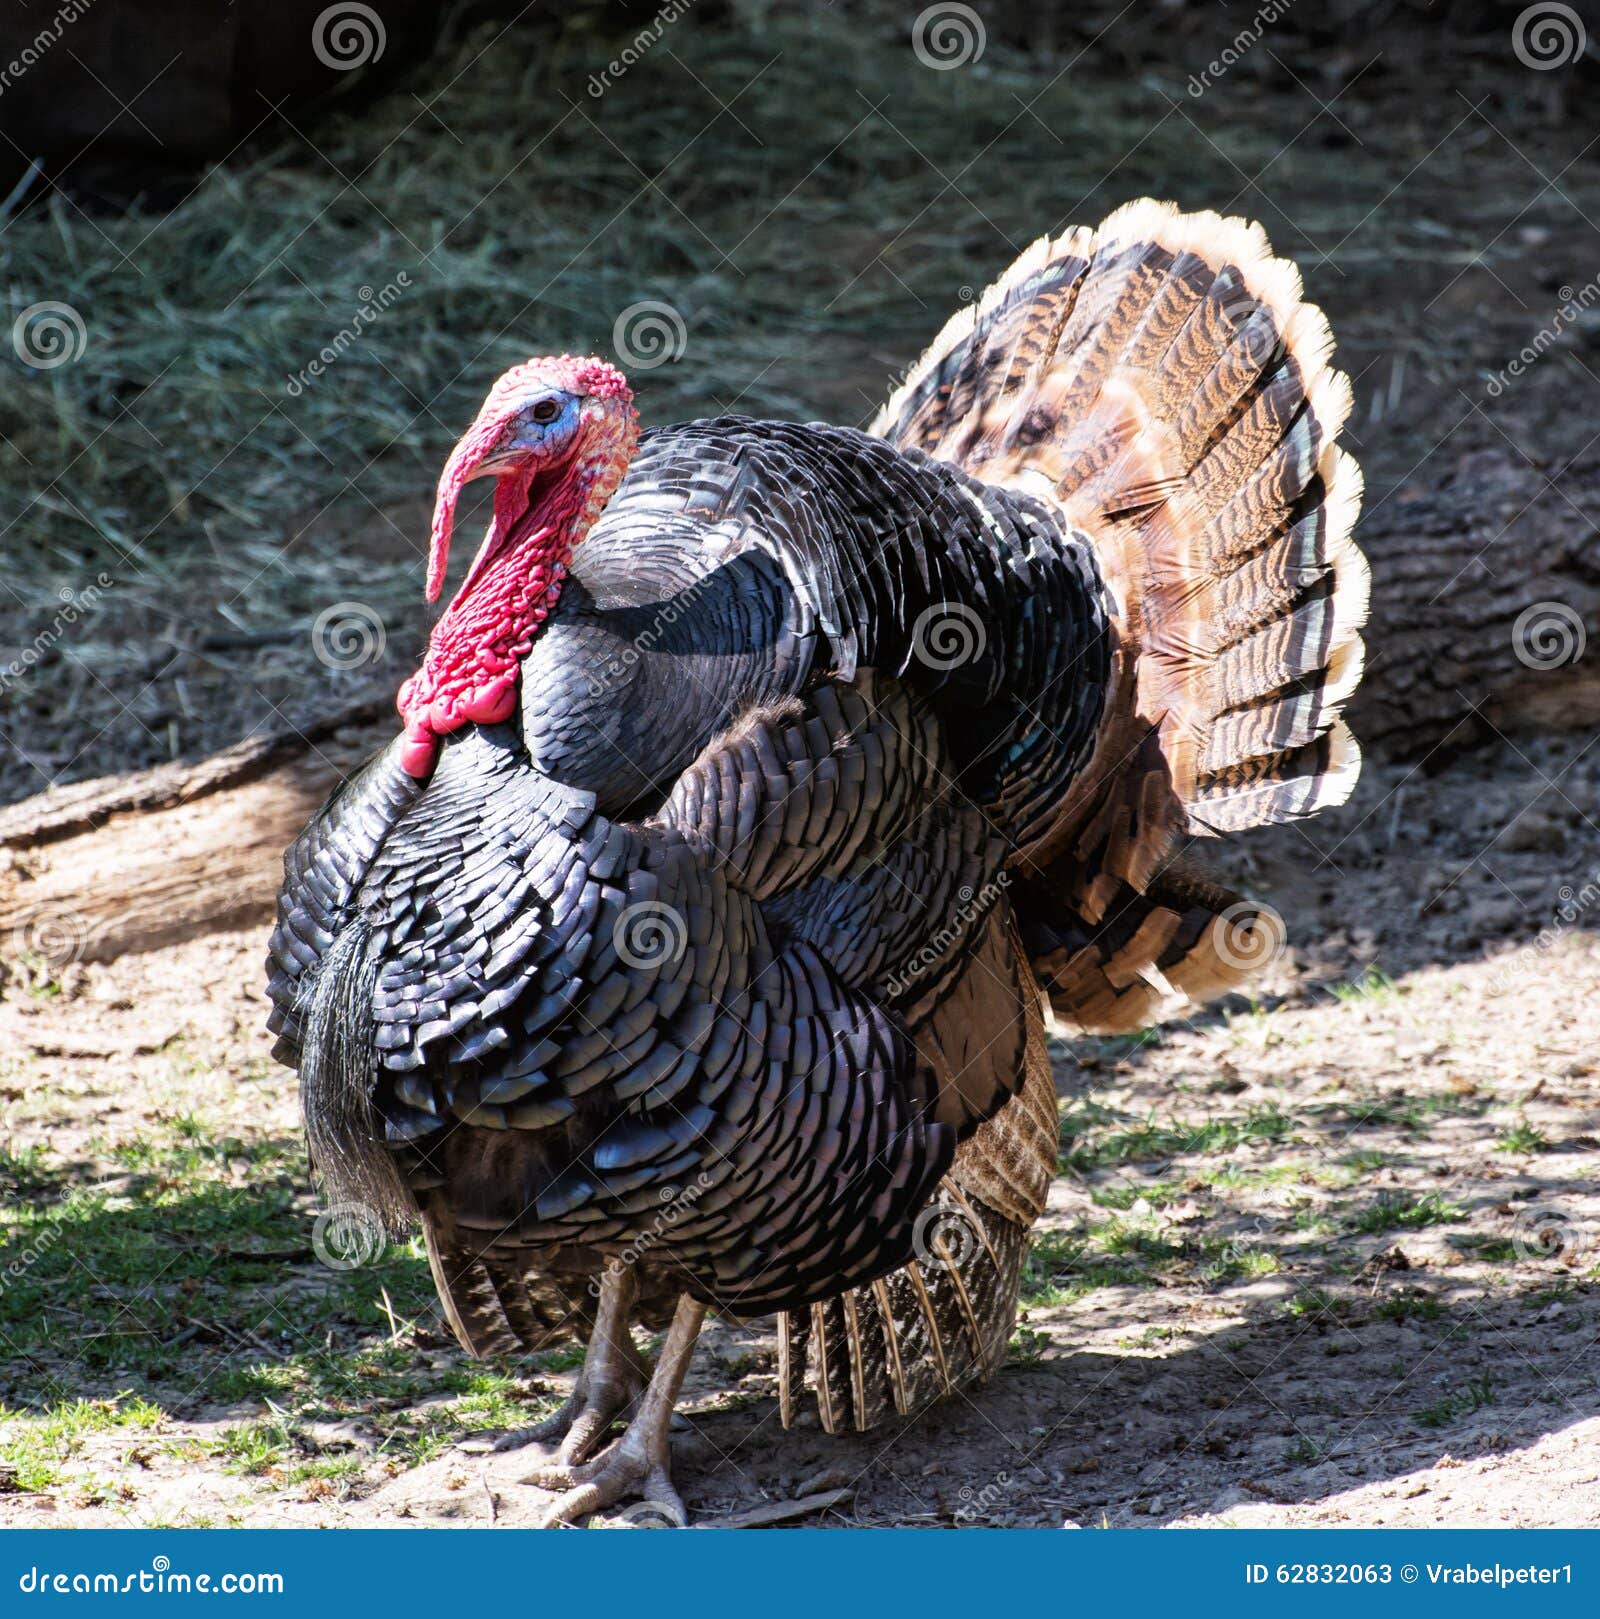 wild turkey (meleagris gallopavo), animal scene